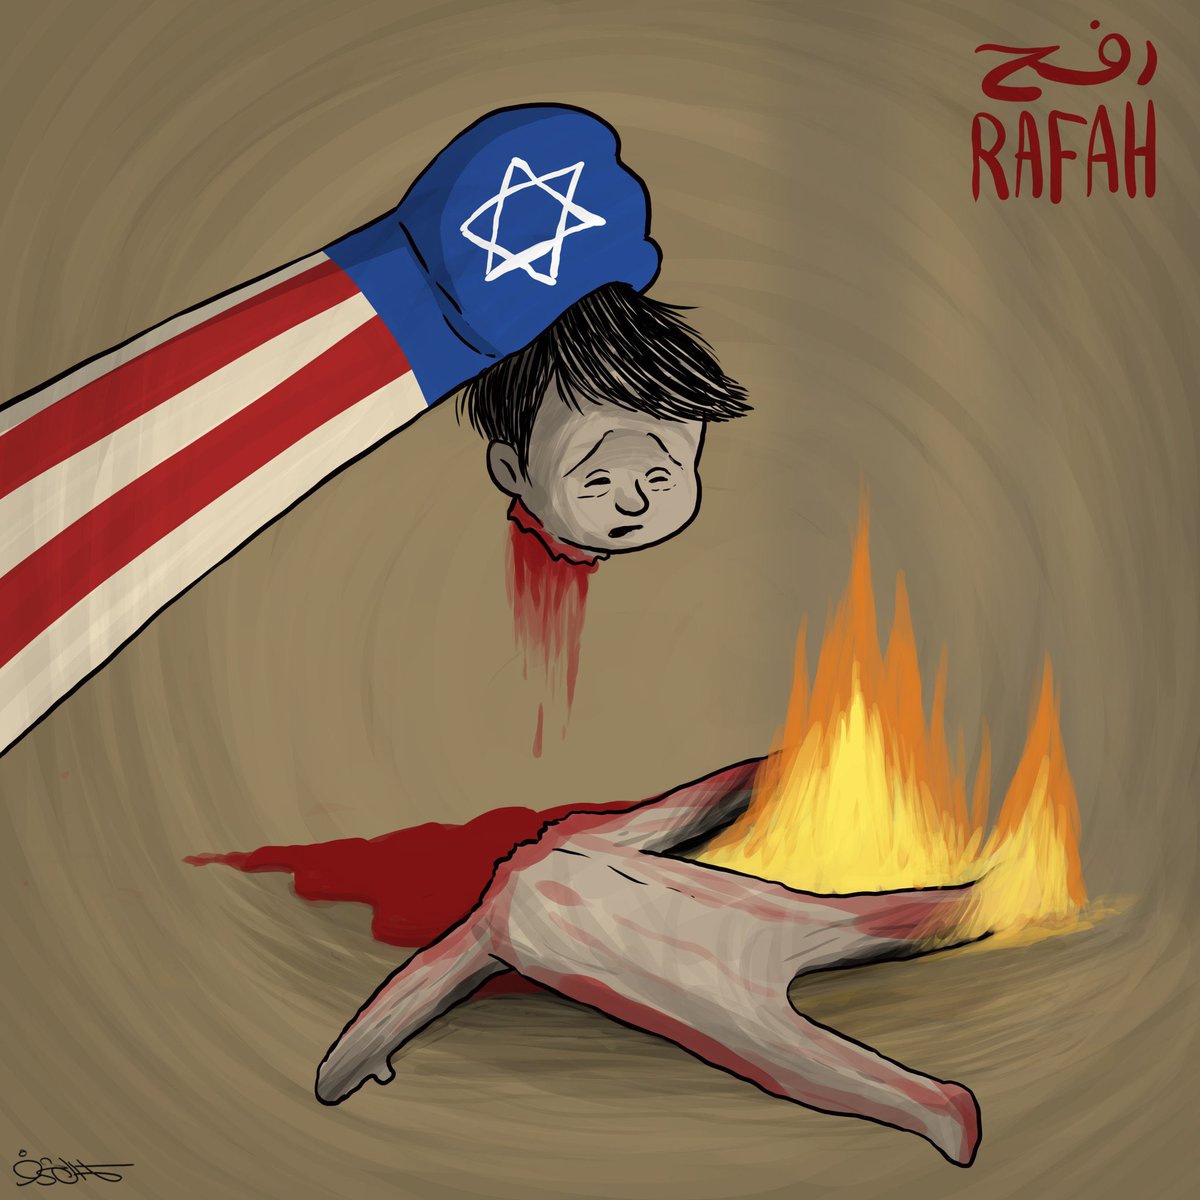 Where is Western humanity headed? #RafahOnFire